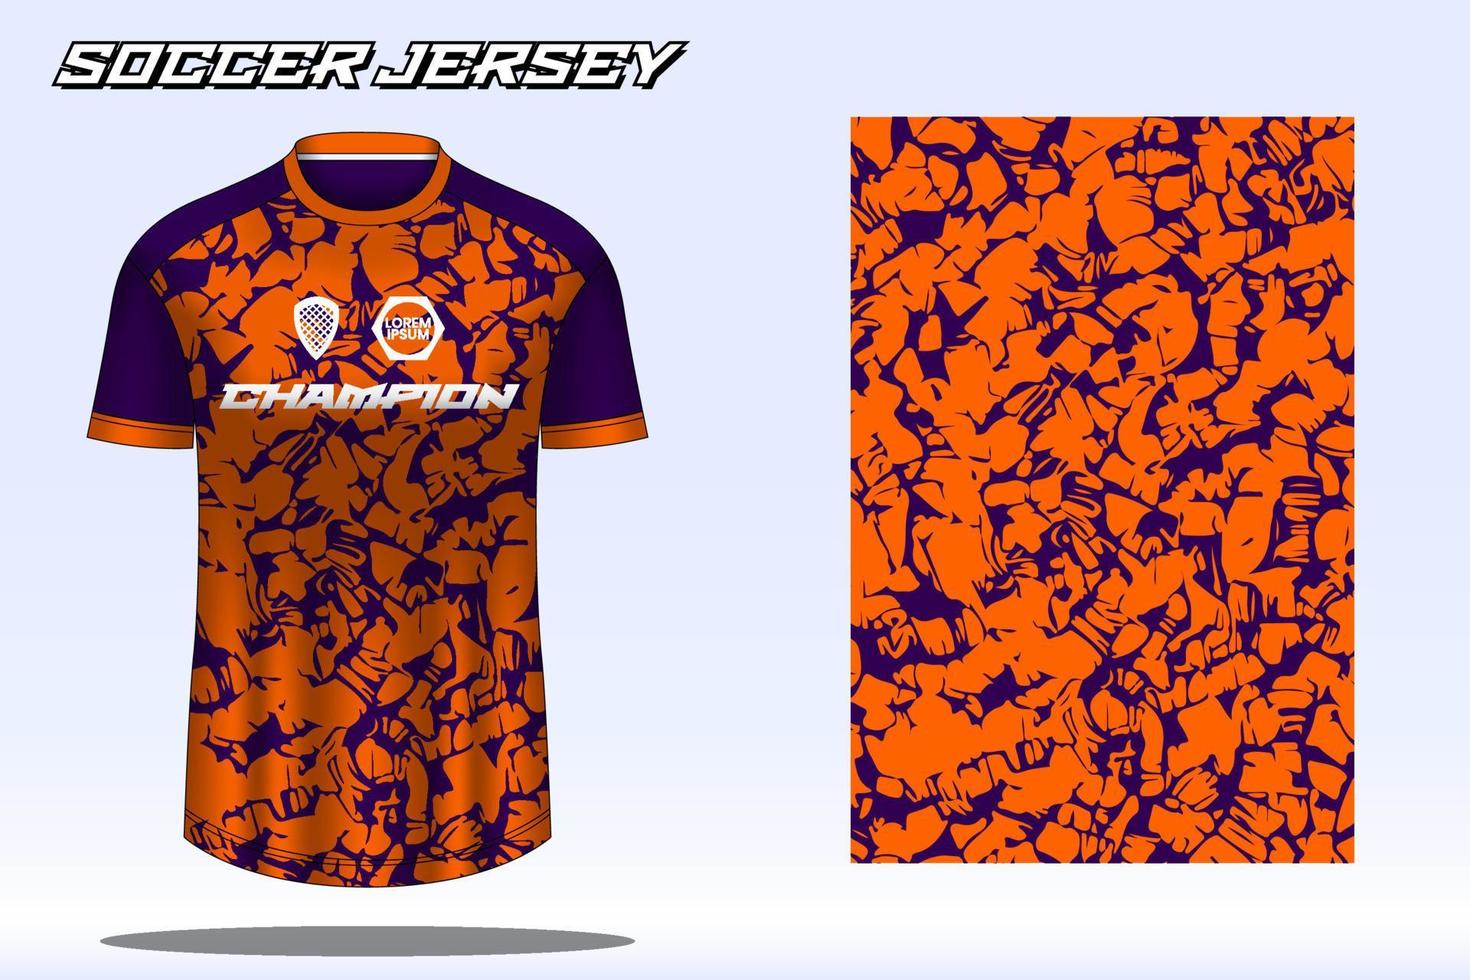 Soccer jersey sport t-shirt design mockup for football club 19511111 ...